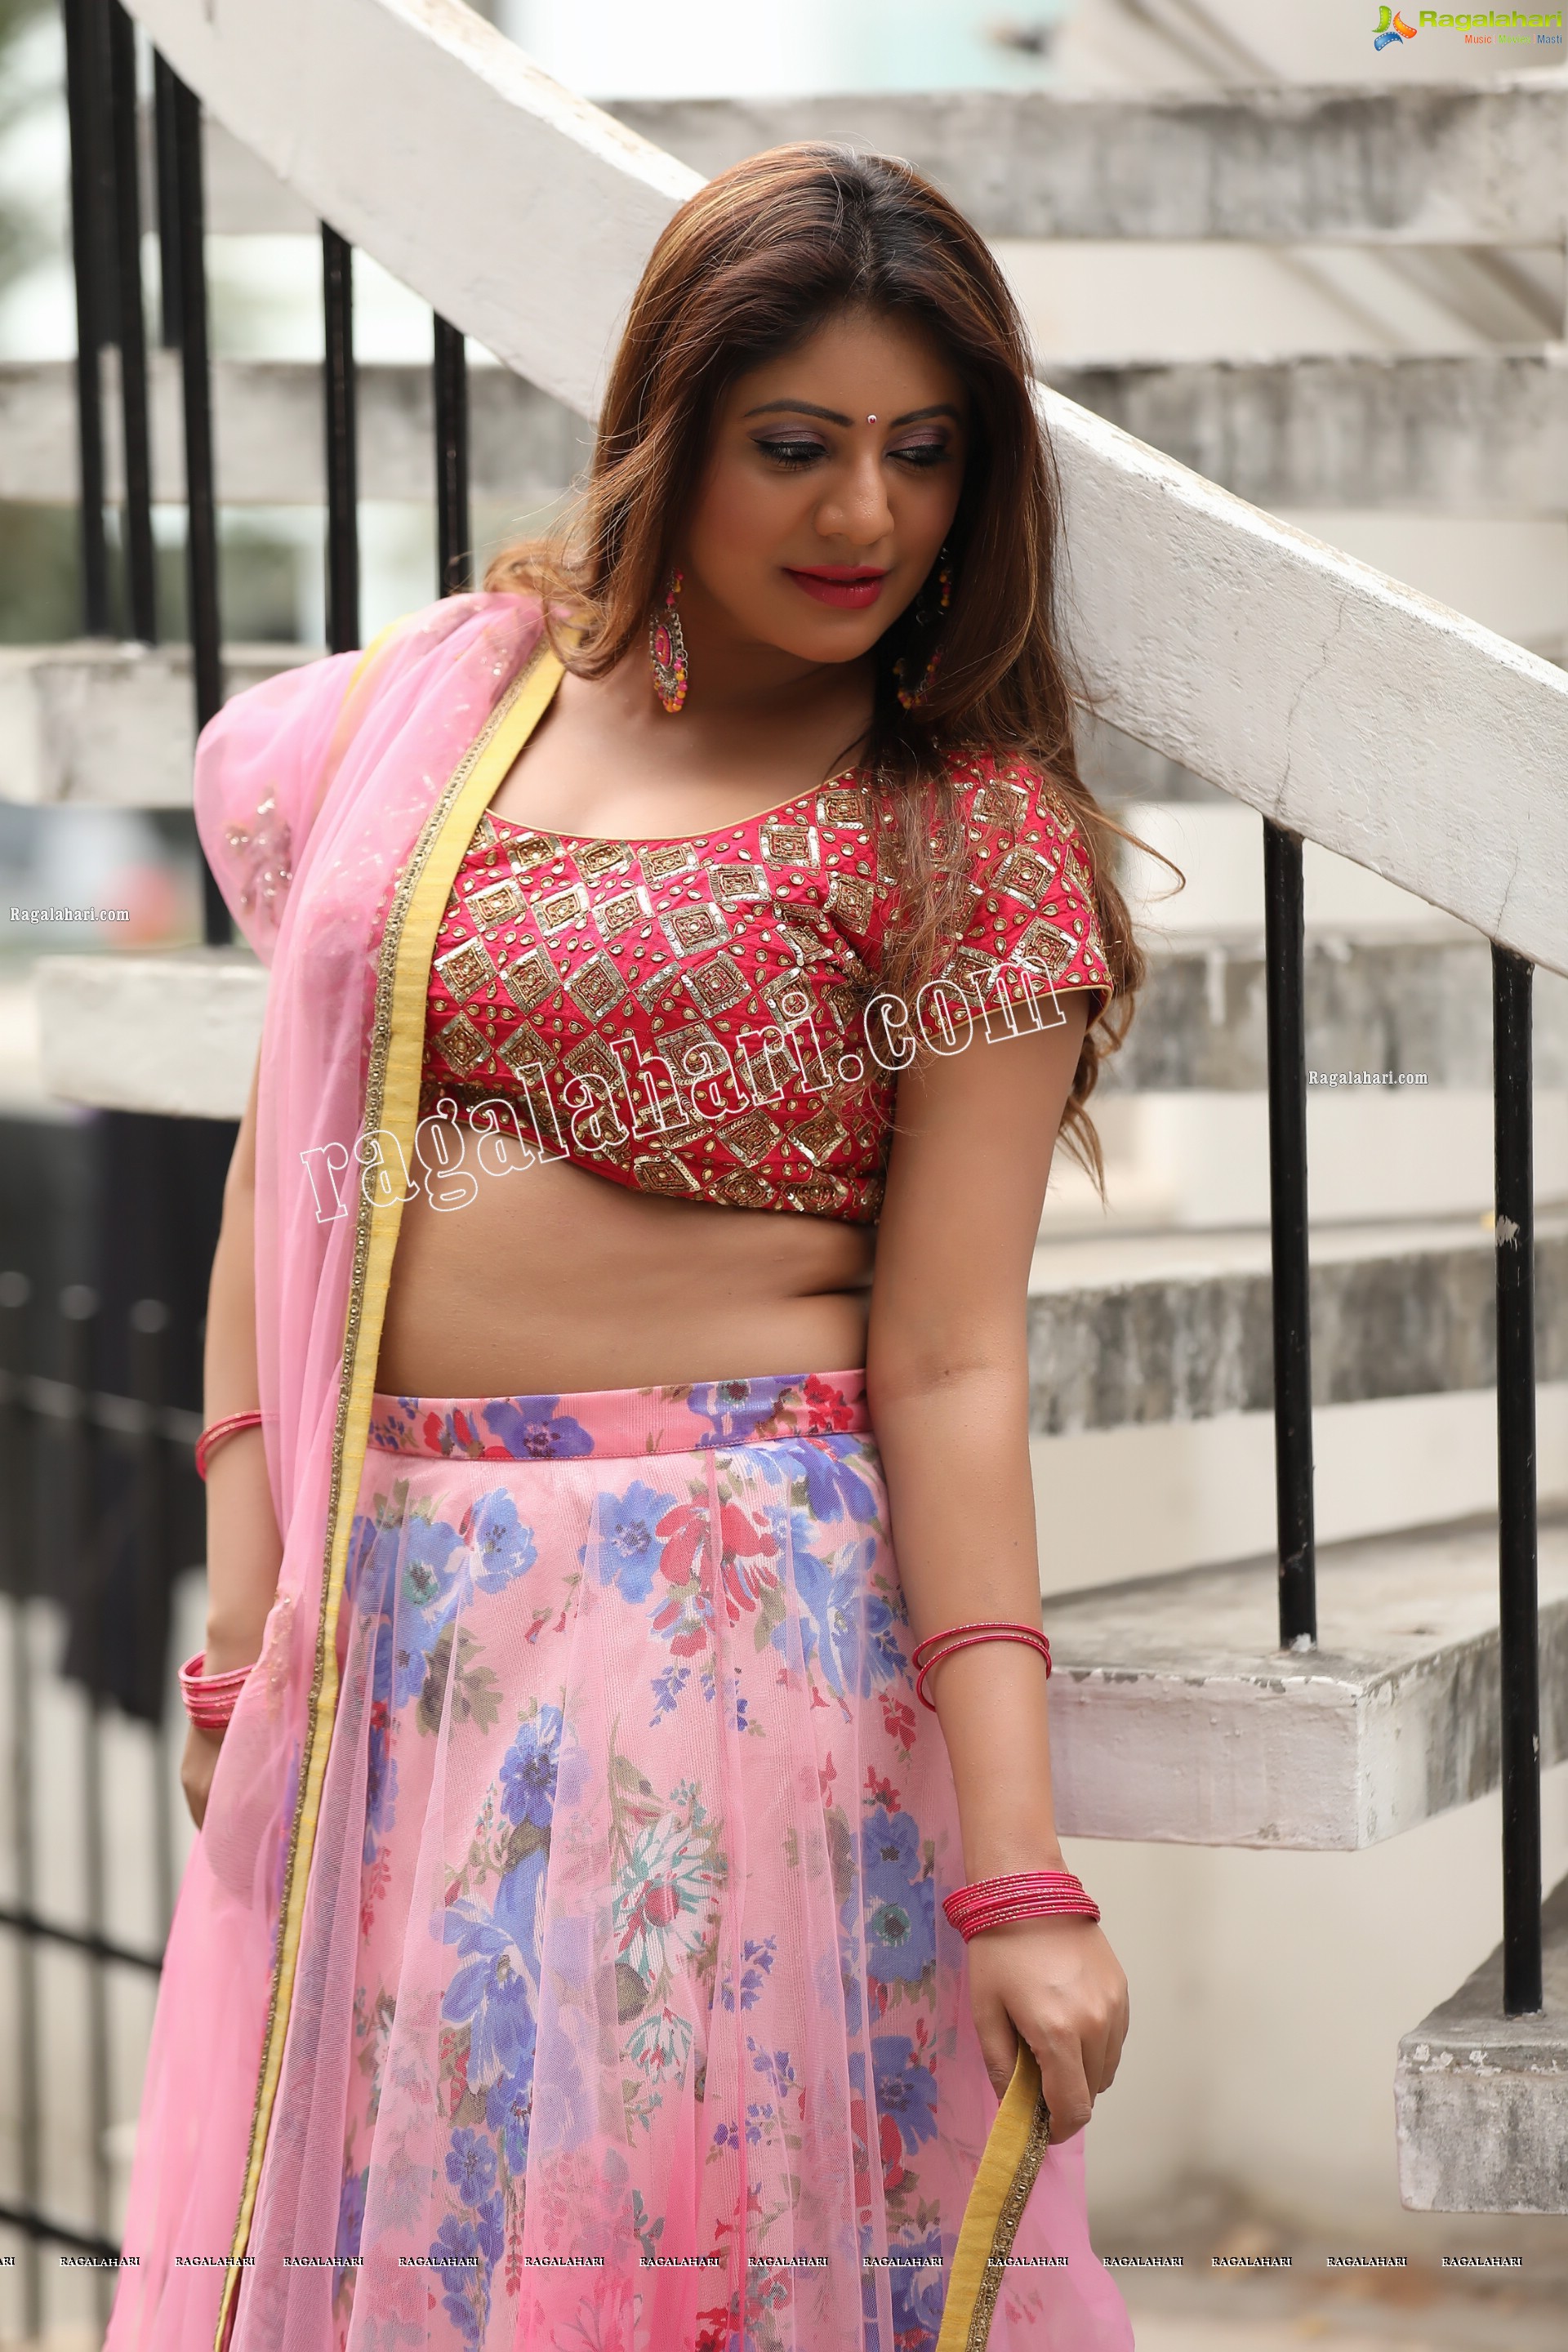 Sejal Mandavia in Pink Floral Lehenga Choli Exclusive Photo Shoot